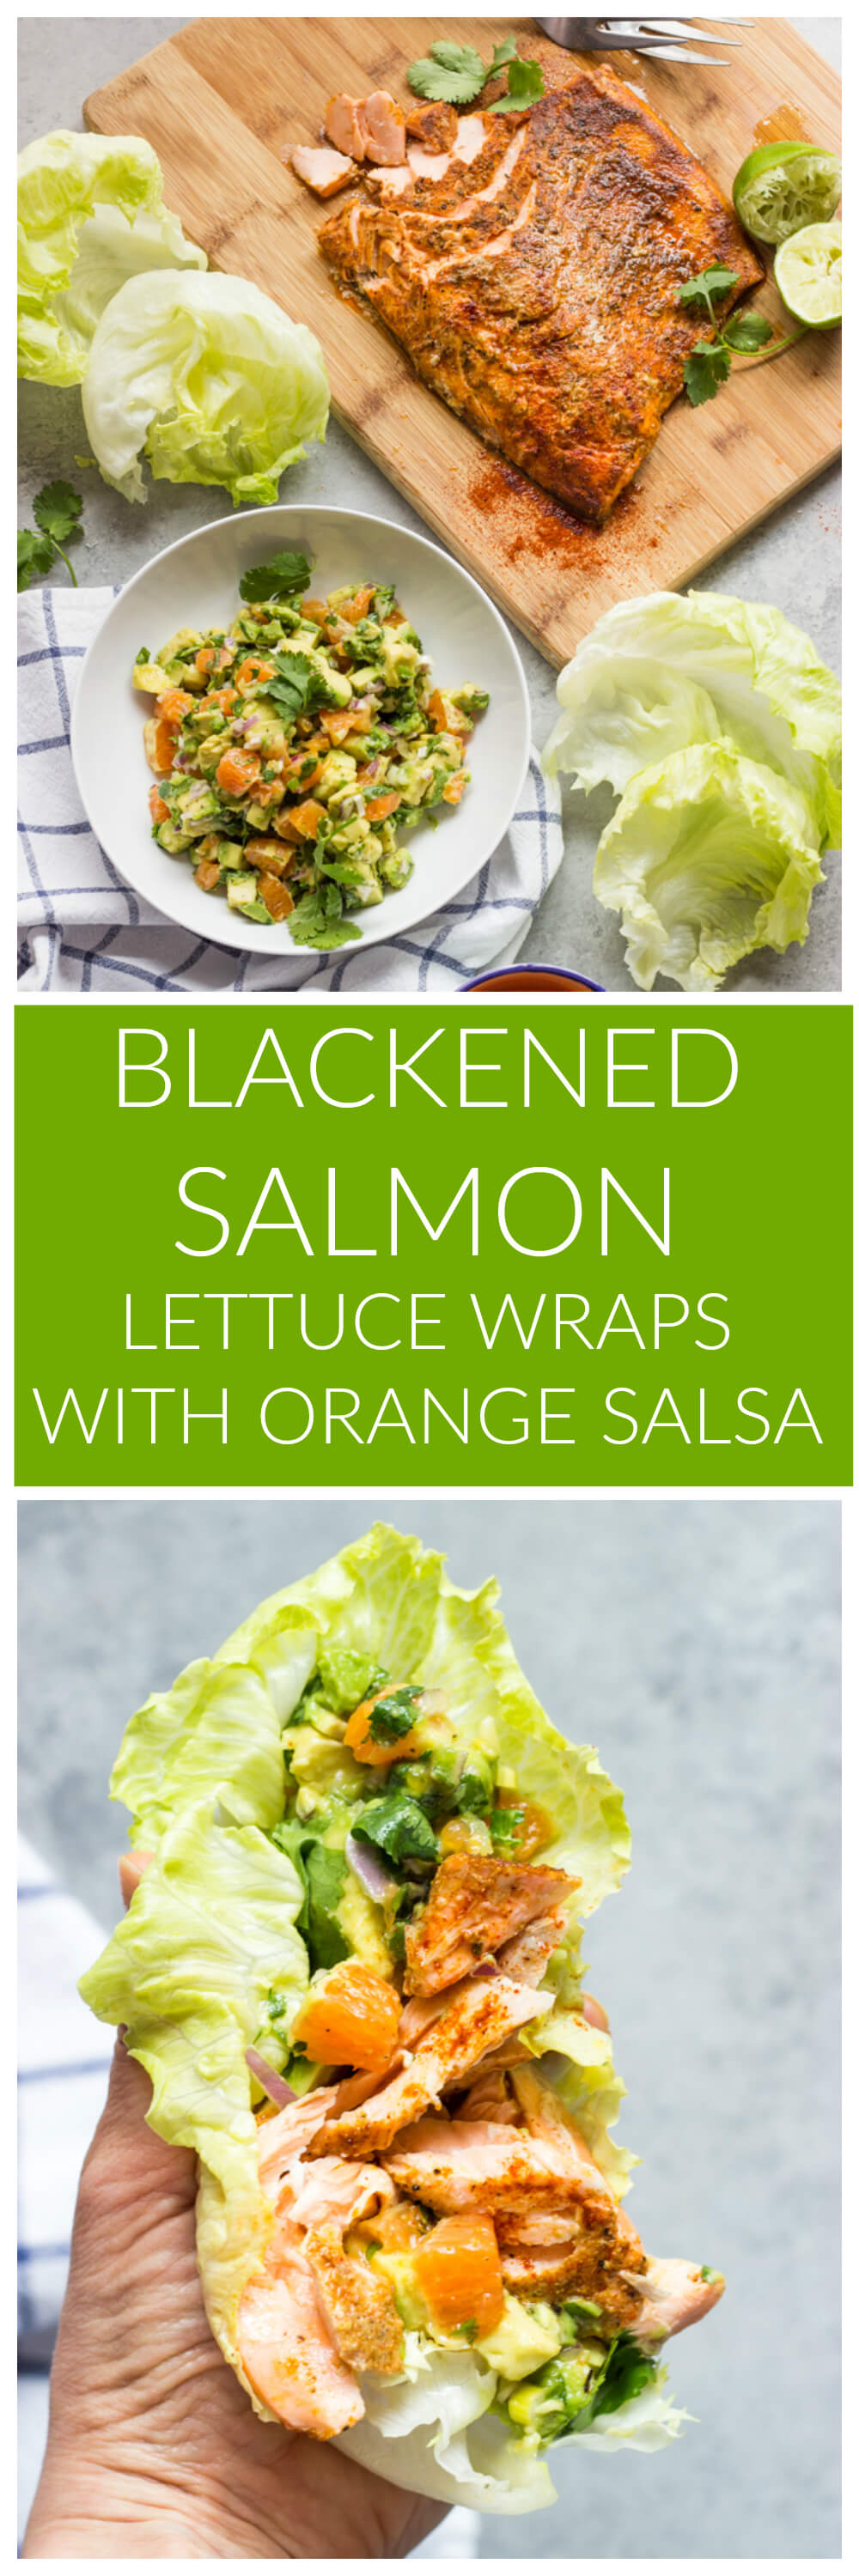 Blackened Salmon Lettuce Wraps with Orange Salsa - the easiest salmon lettuce wraps with insanely delicious orange avocado salsa! Low carb and easy to make | littlebroken.com @littlebroken